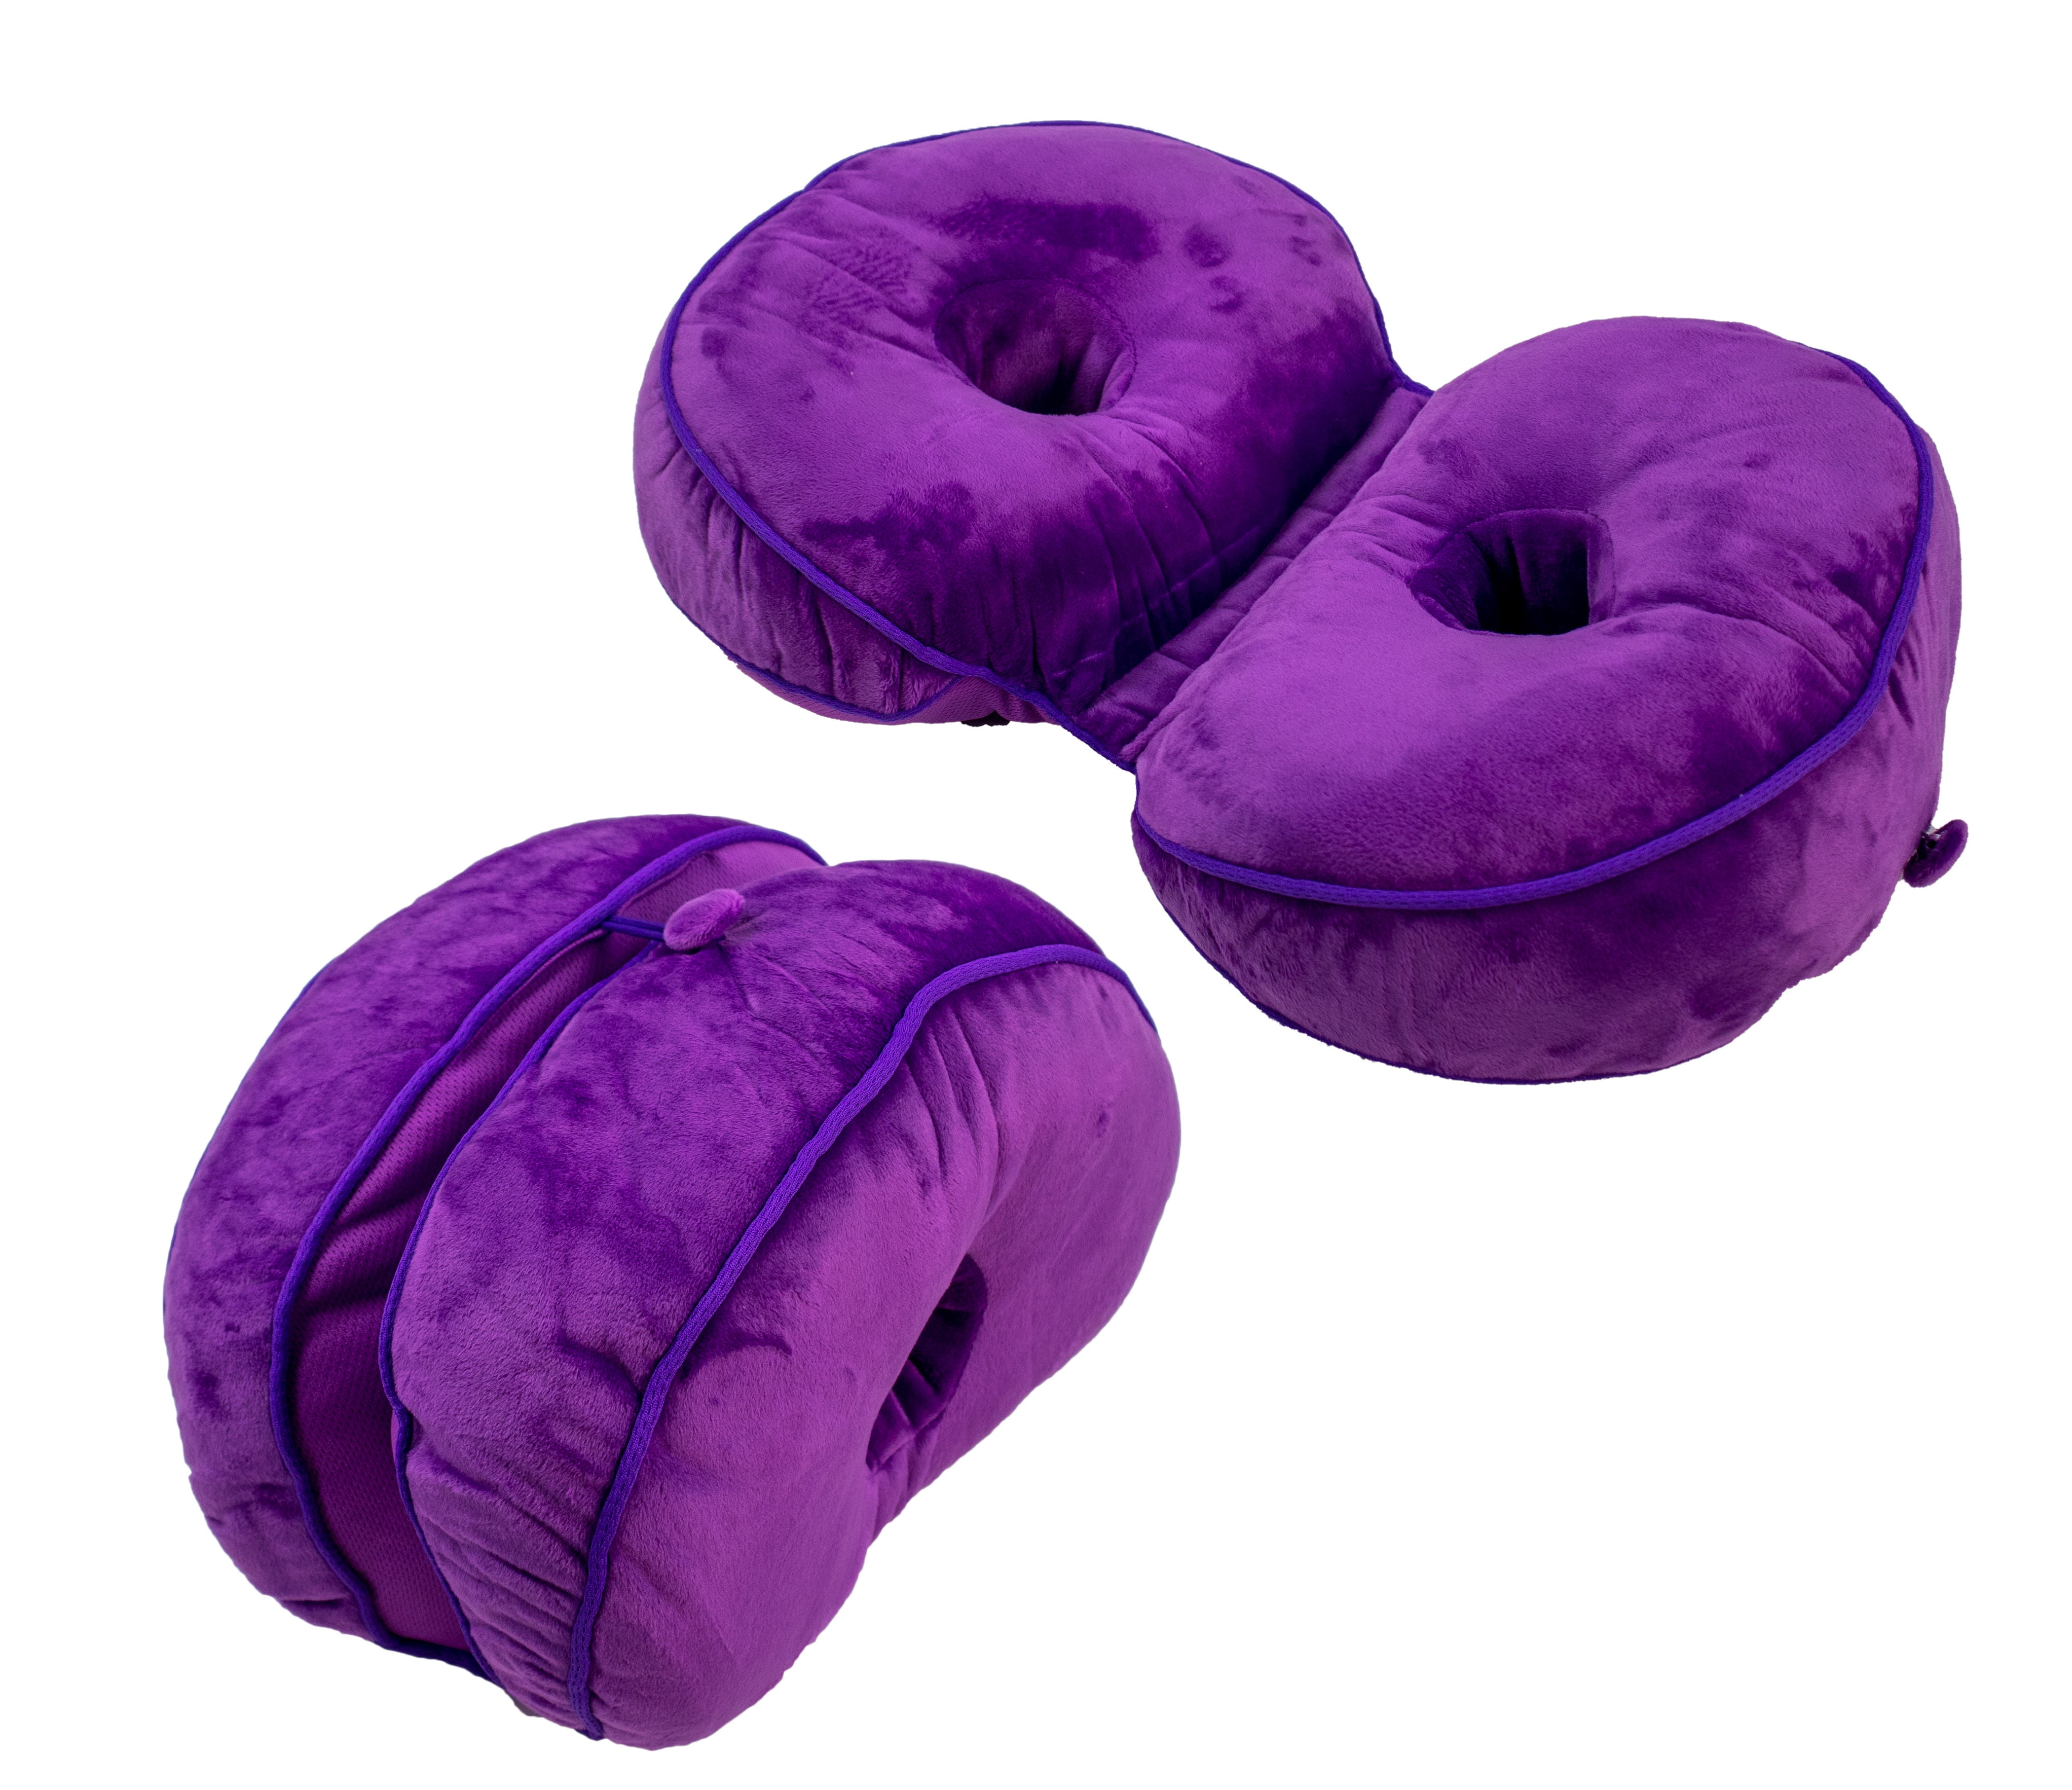 Women's Dual Comfort Orthopedic Cushion Pelvis/Tailbone Support Pillow –